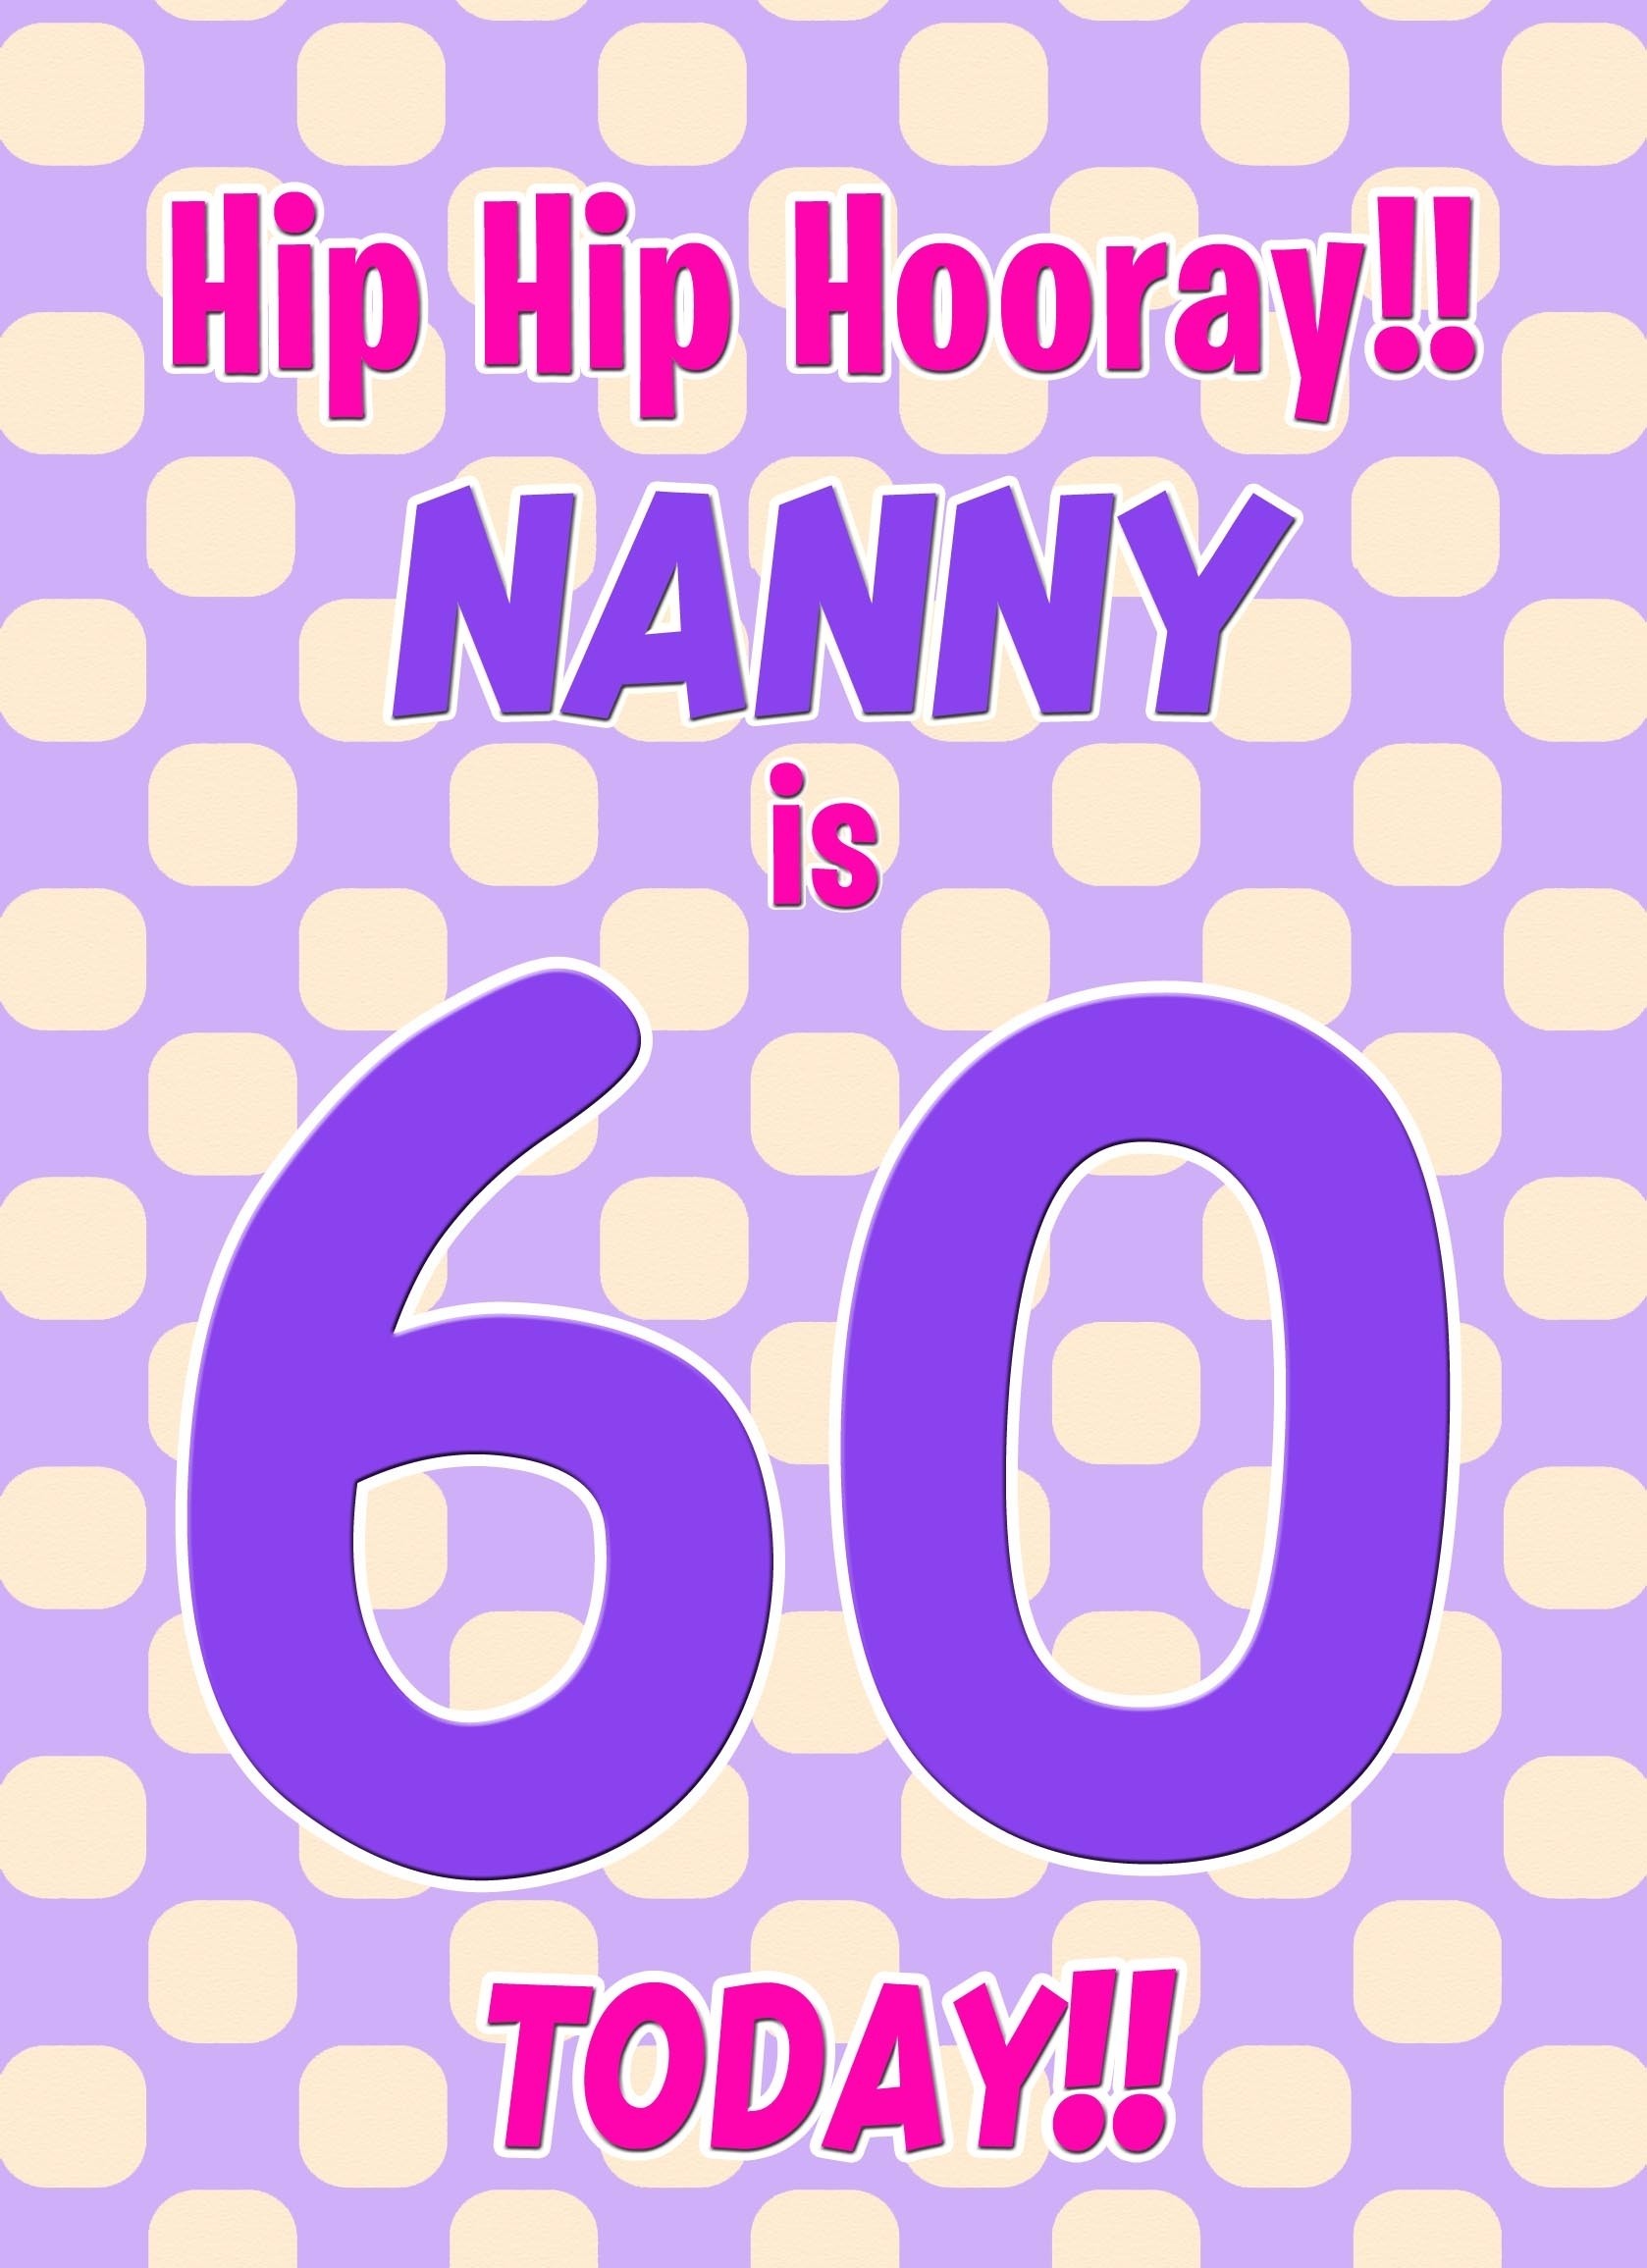 Nanny 60th Birthday Card (Purple Spots)